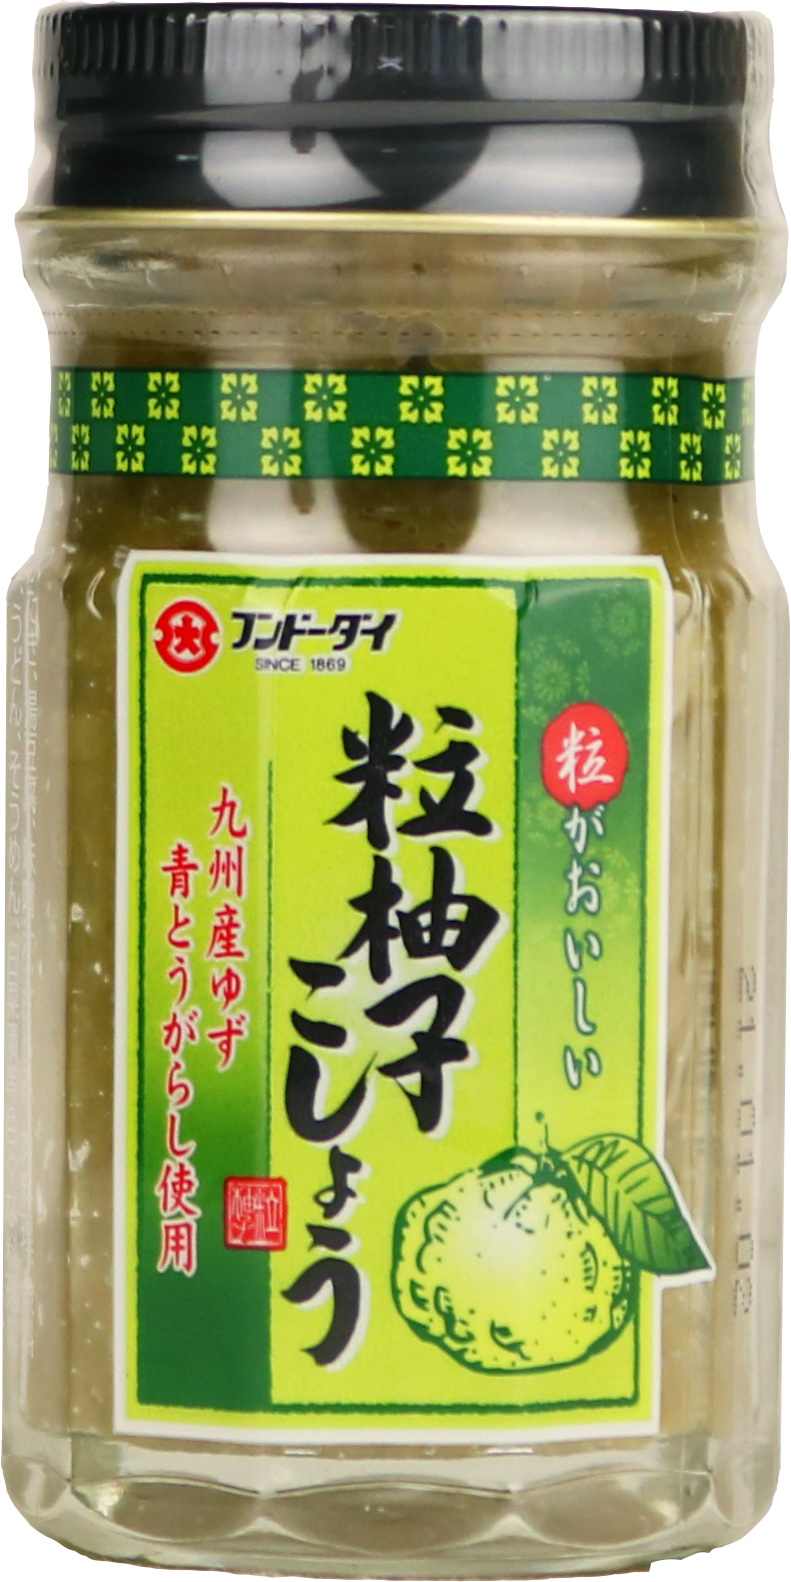 Grain Yuzu Kosho (Japanese pepper) 60g Jar